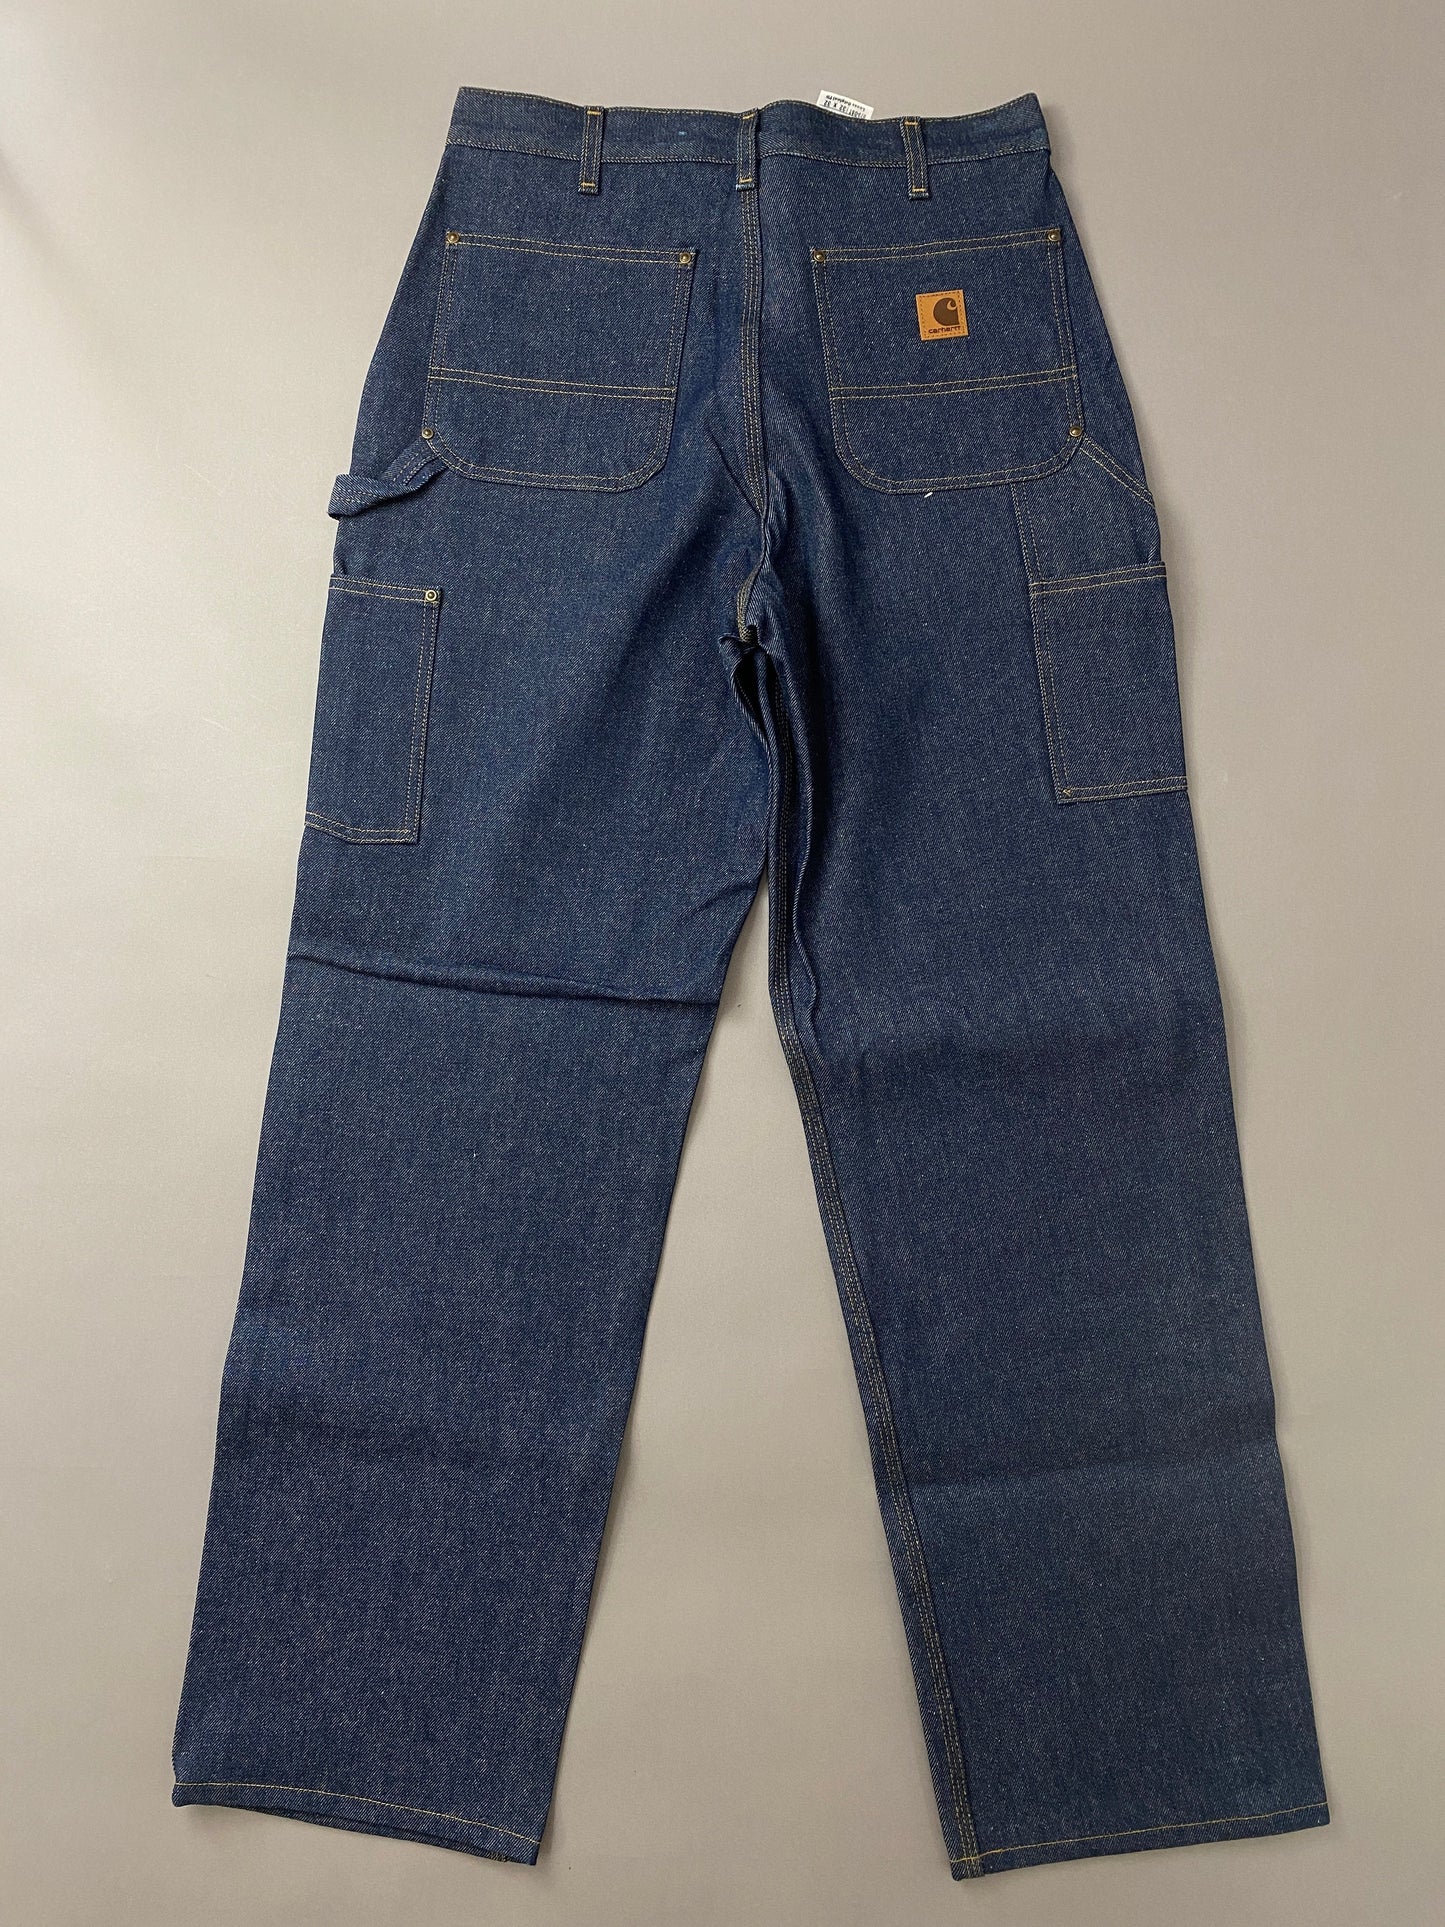 Double Knee Carhartt Jeans - 33 x 32